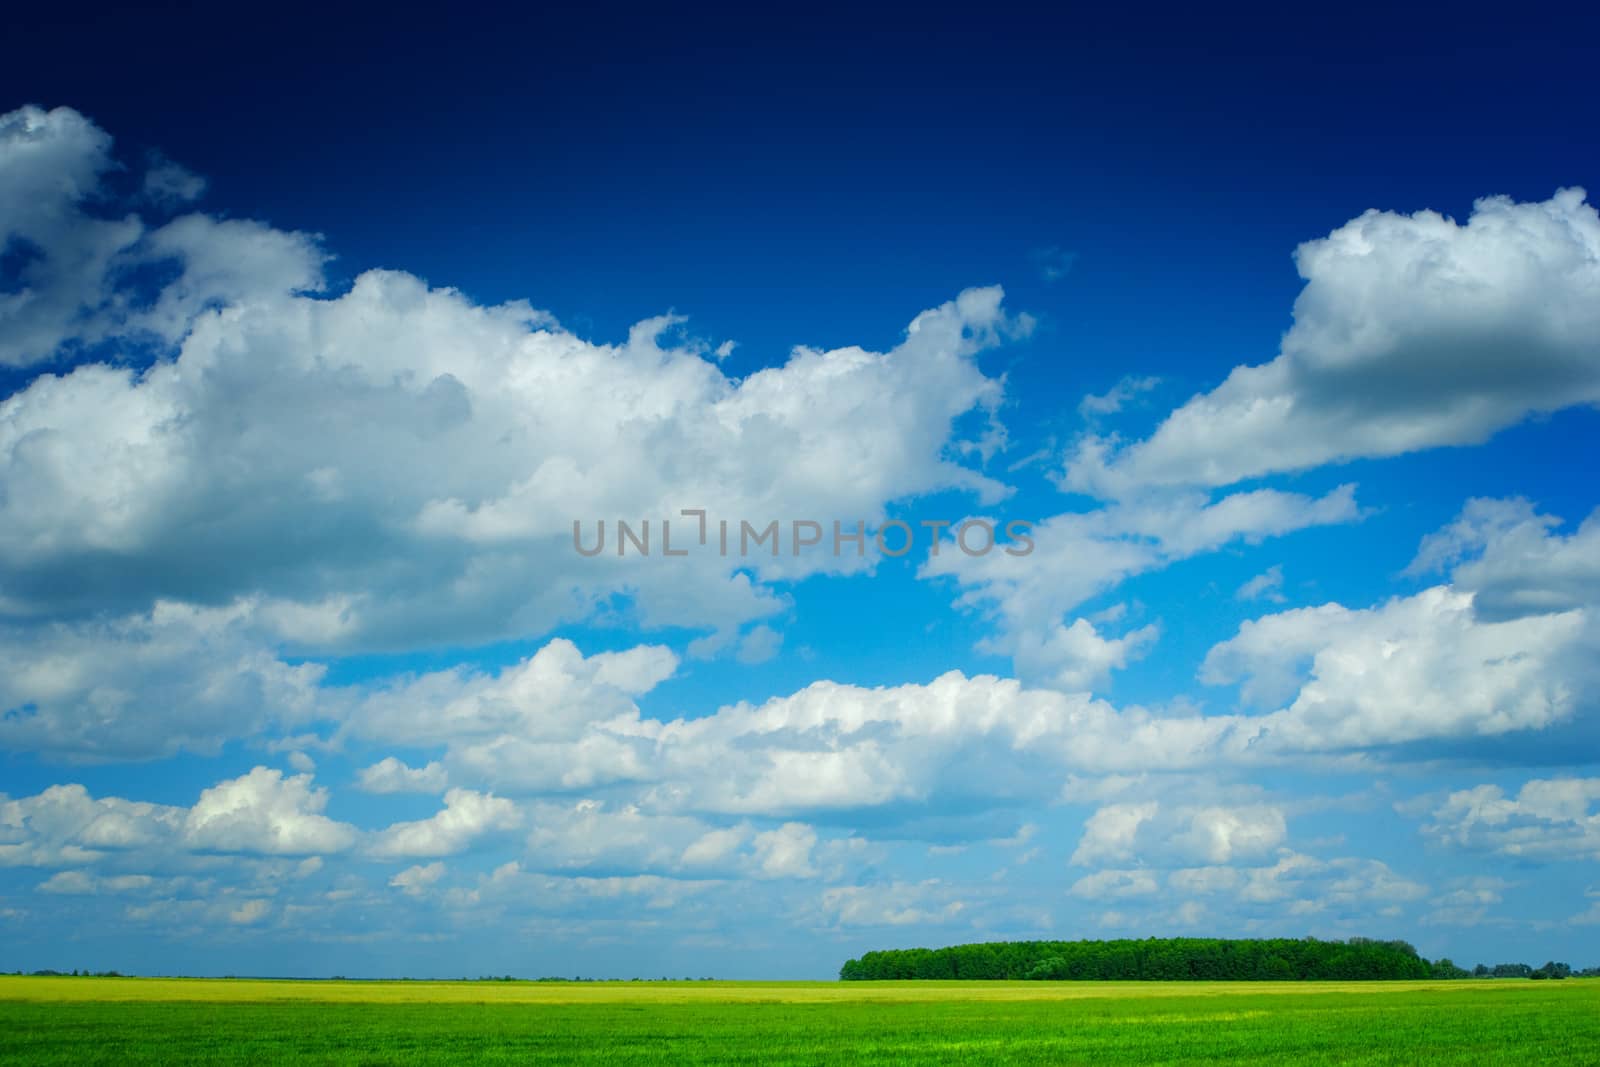 beauty summer field with blue sky